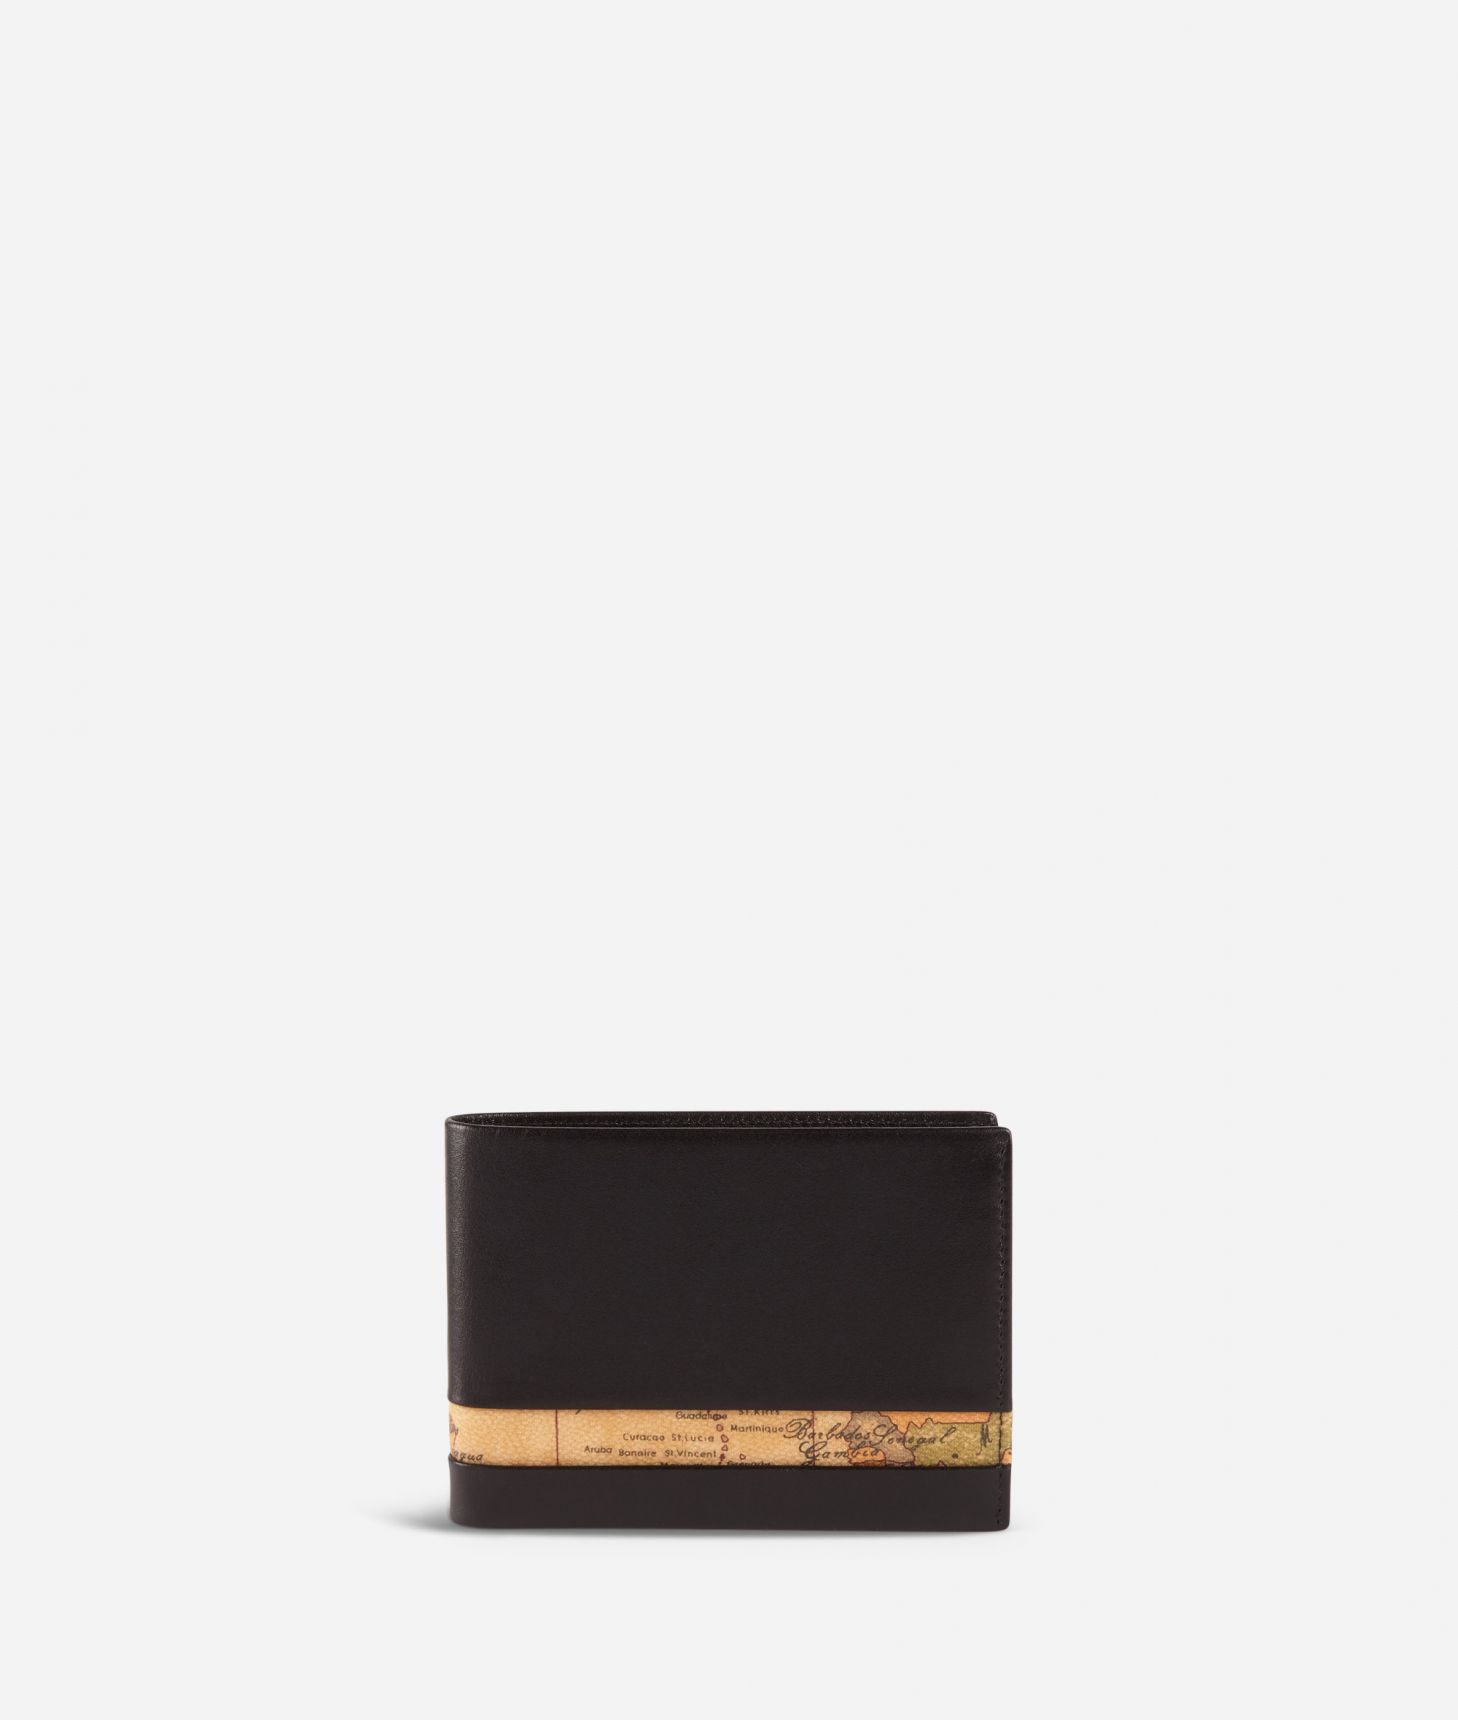 Geo Classic men’s wallet in leather black,front